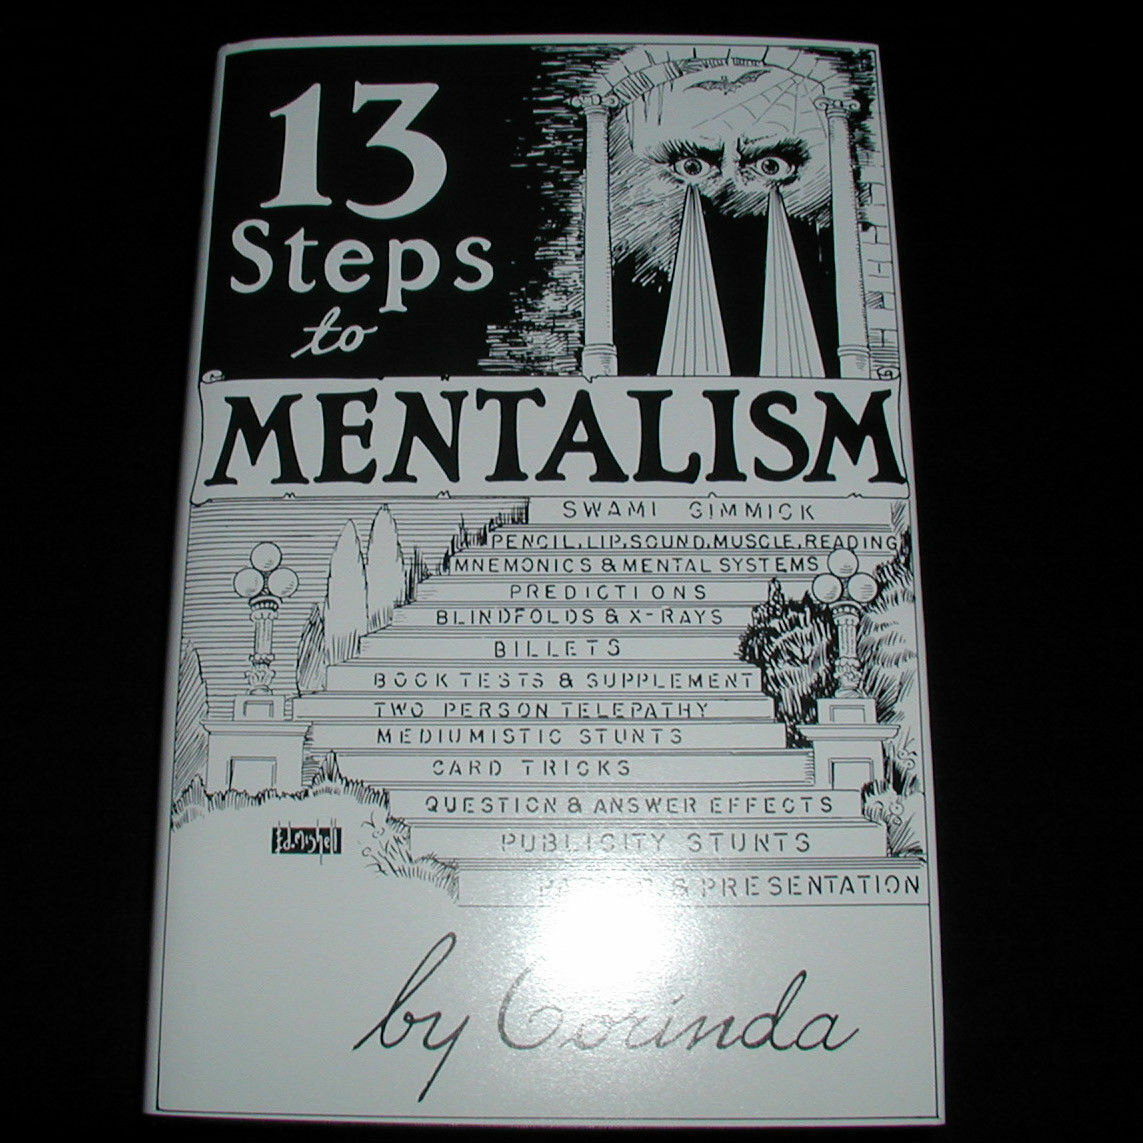  13 (Thirteen) Steps To Mentalism by Corinda Superb Mentalism Hardback Book